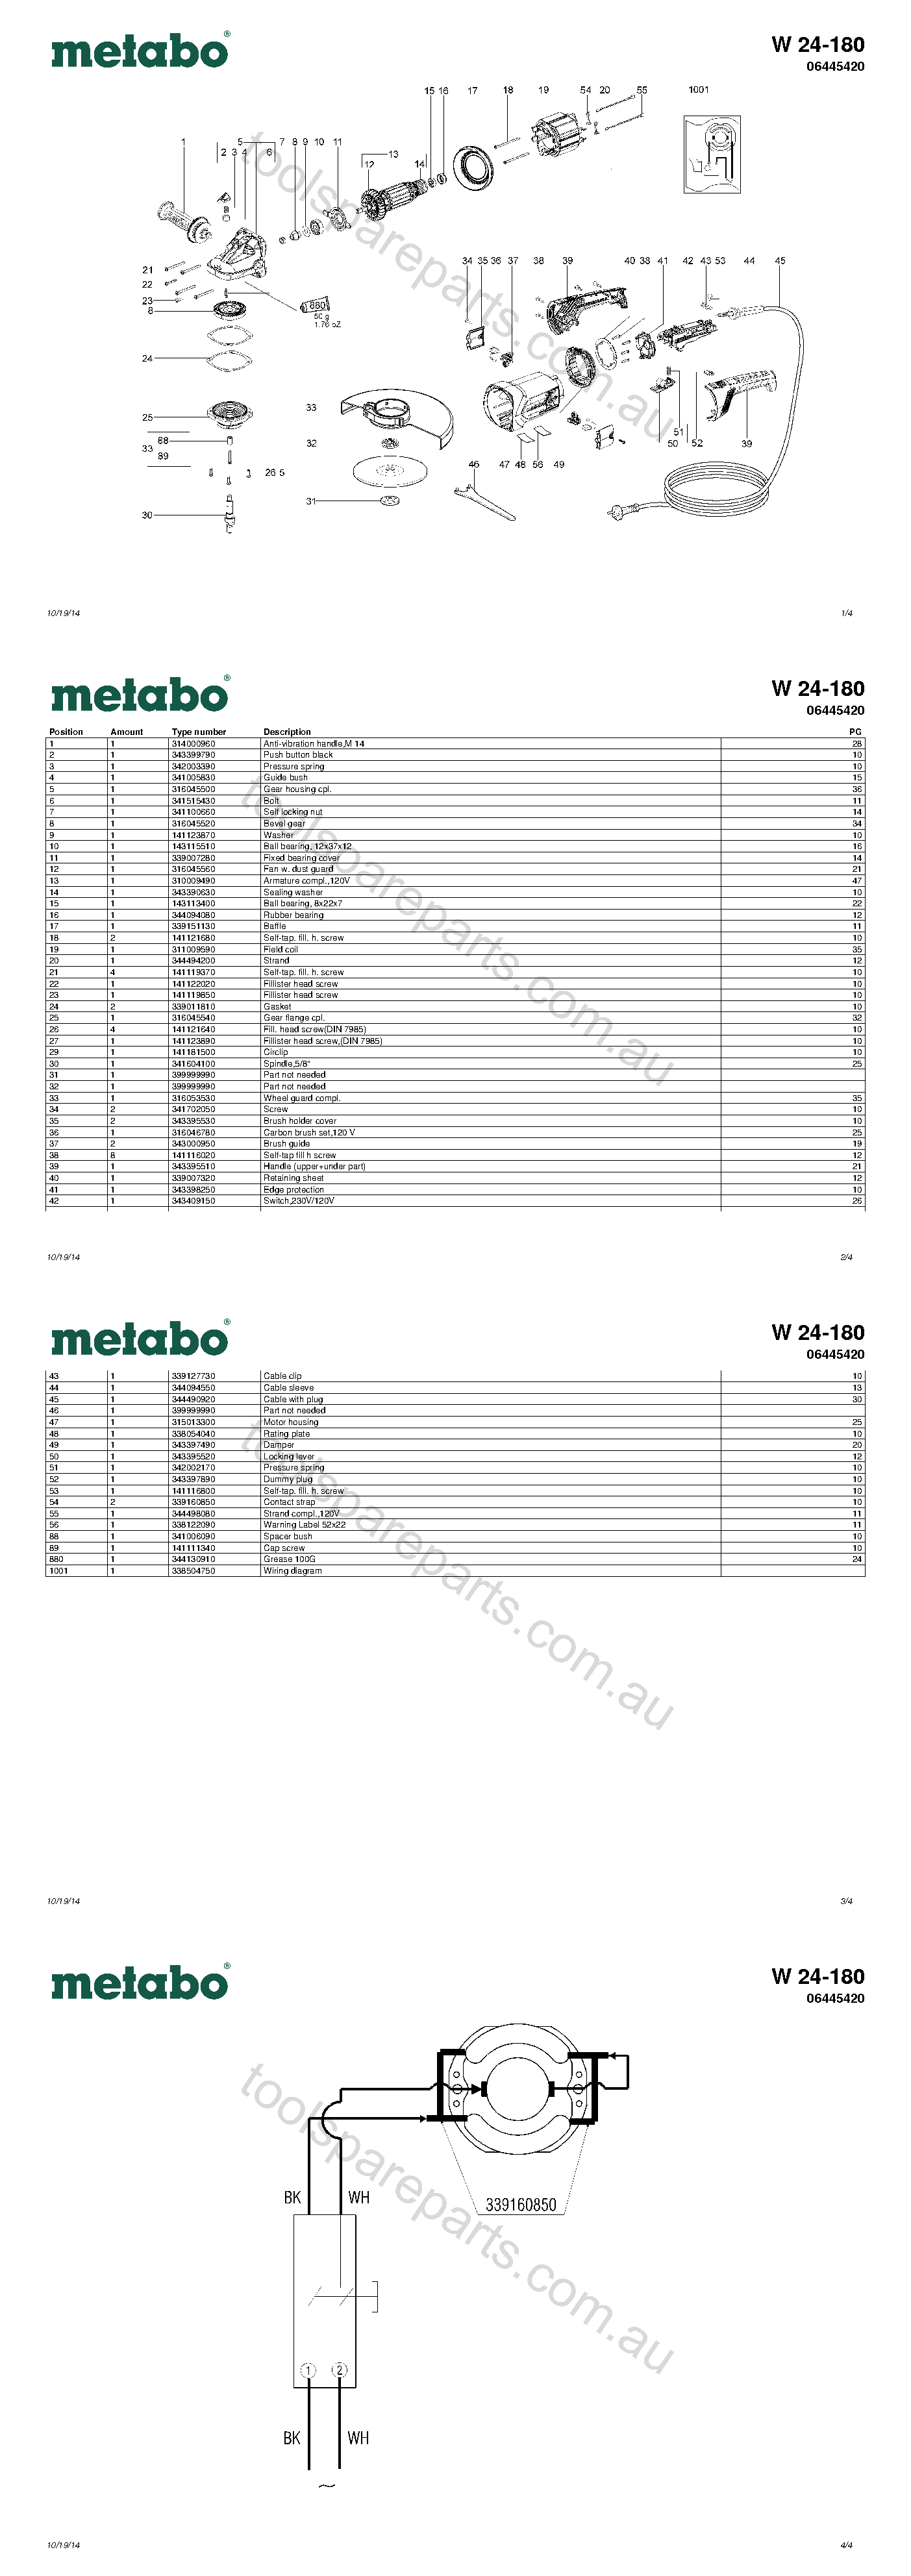 Metabo W 24-180 06445420  Diagram 1